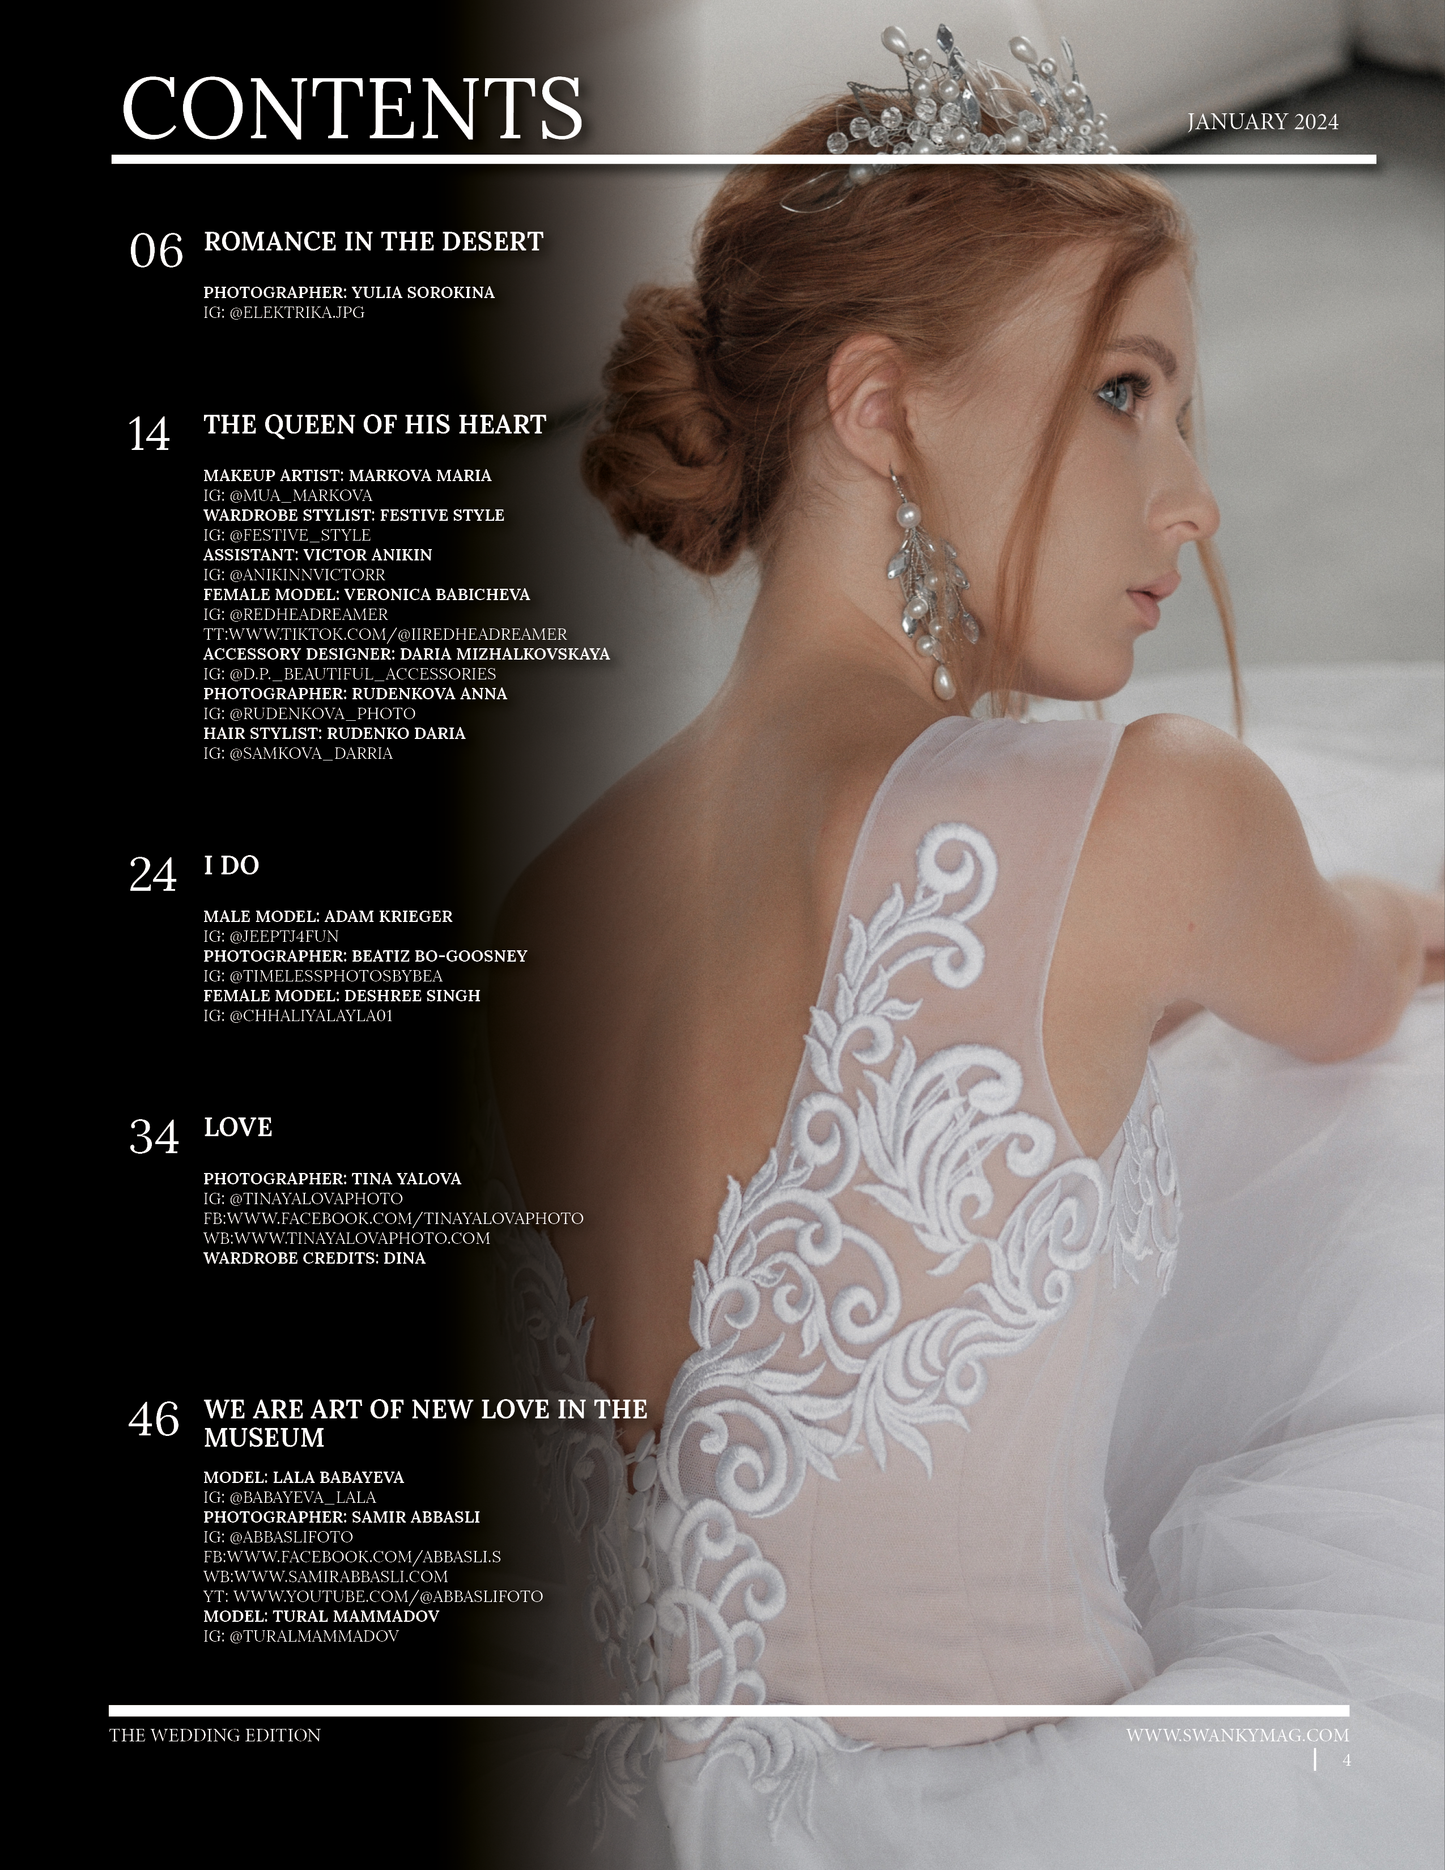 Swanky Weddings Magazine - January 2024: The Wedding Edition Issue